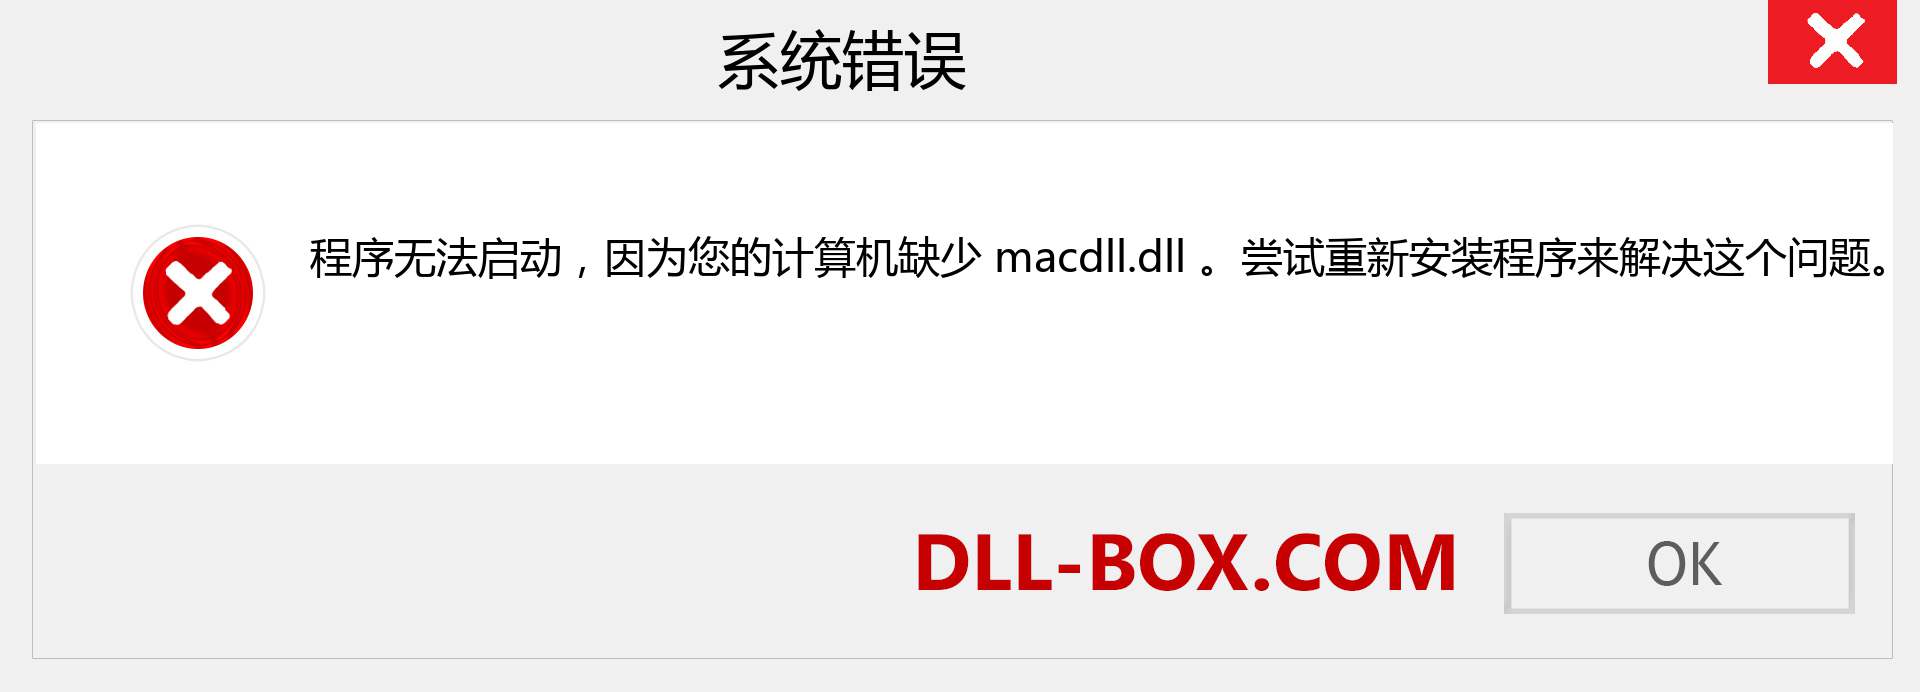 macdll.dll 文件丢失？。 适用于 Windows 7、8、10 的下载 - 修复 Windows、照片、图像上的 macdll dll 丢失错误